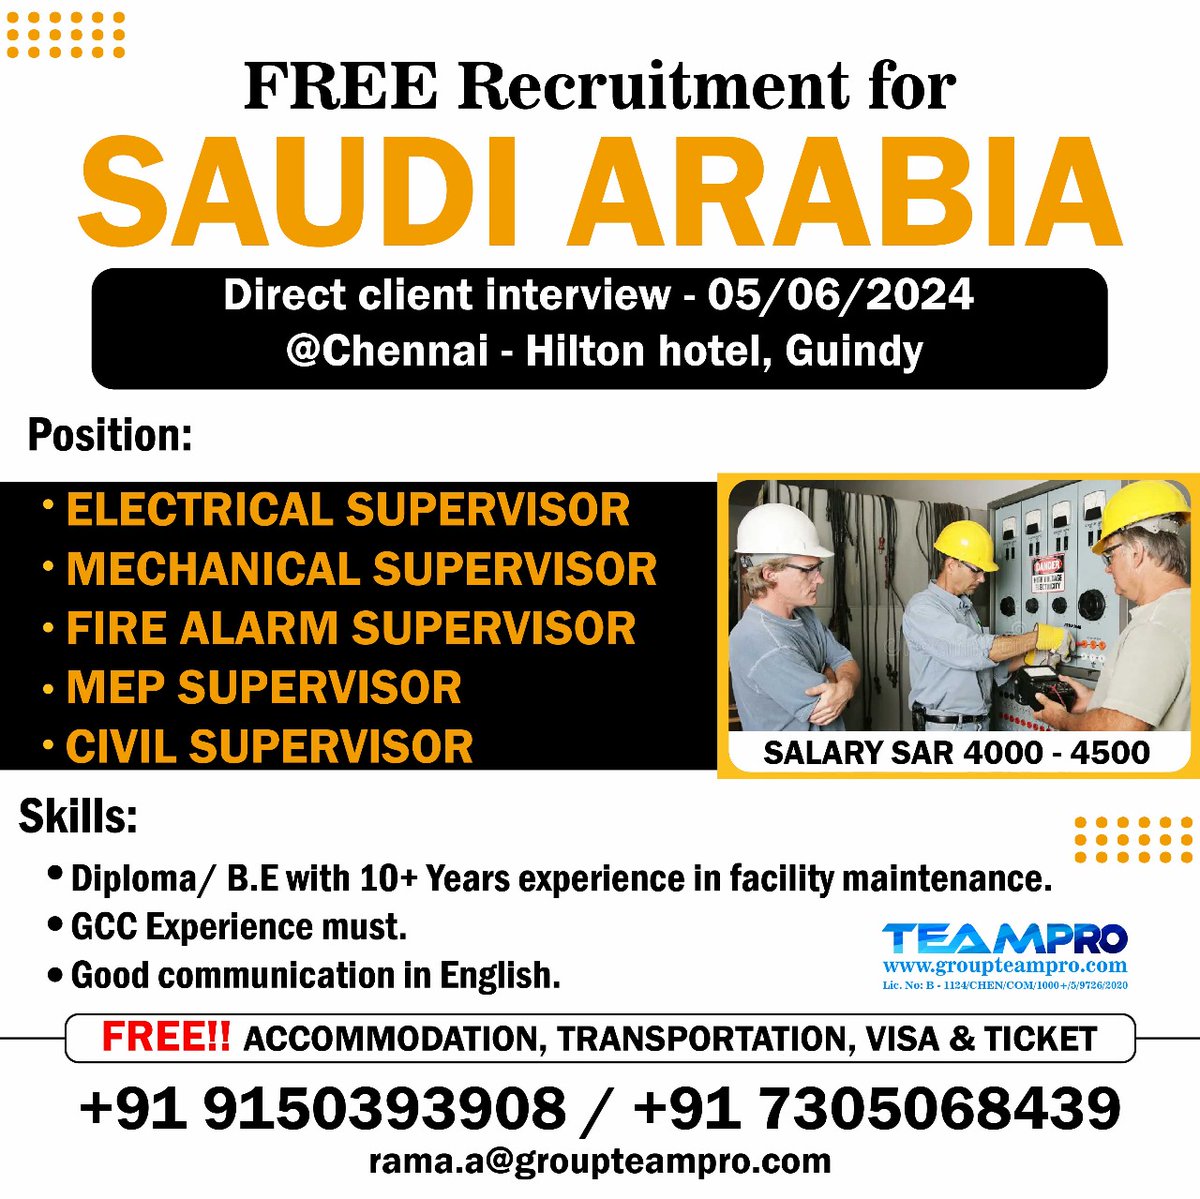 #freerecruitment #saudijobs #saudijobseekers #supervisor #electrical #mechanical #firealamr #maintenancesupervisor #facilitymaintenance #immediatejoiners #directinterview #shortlsitingunderprogress